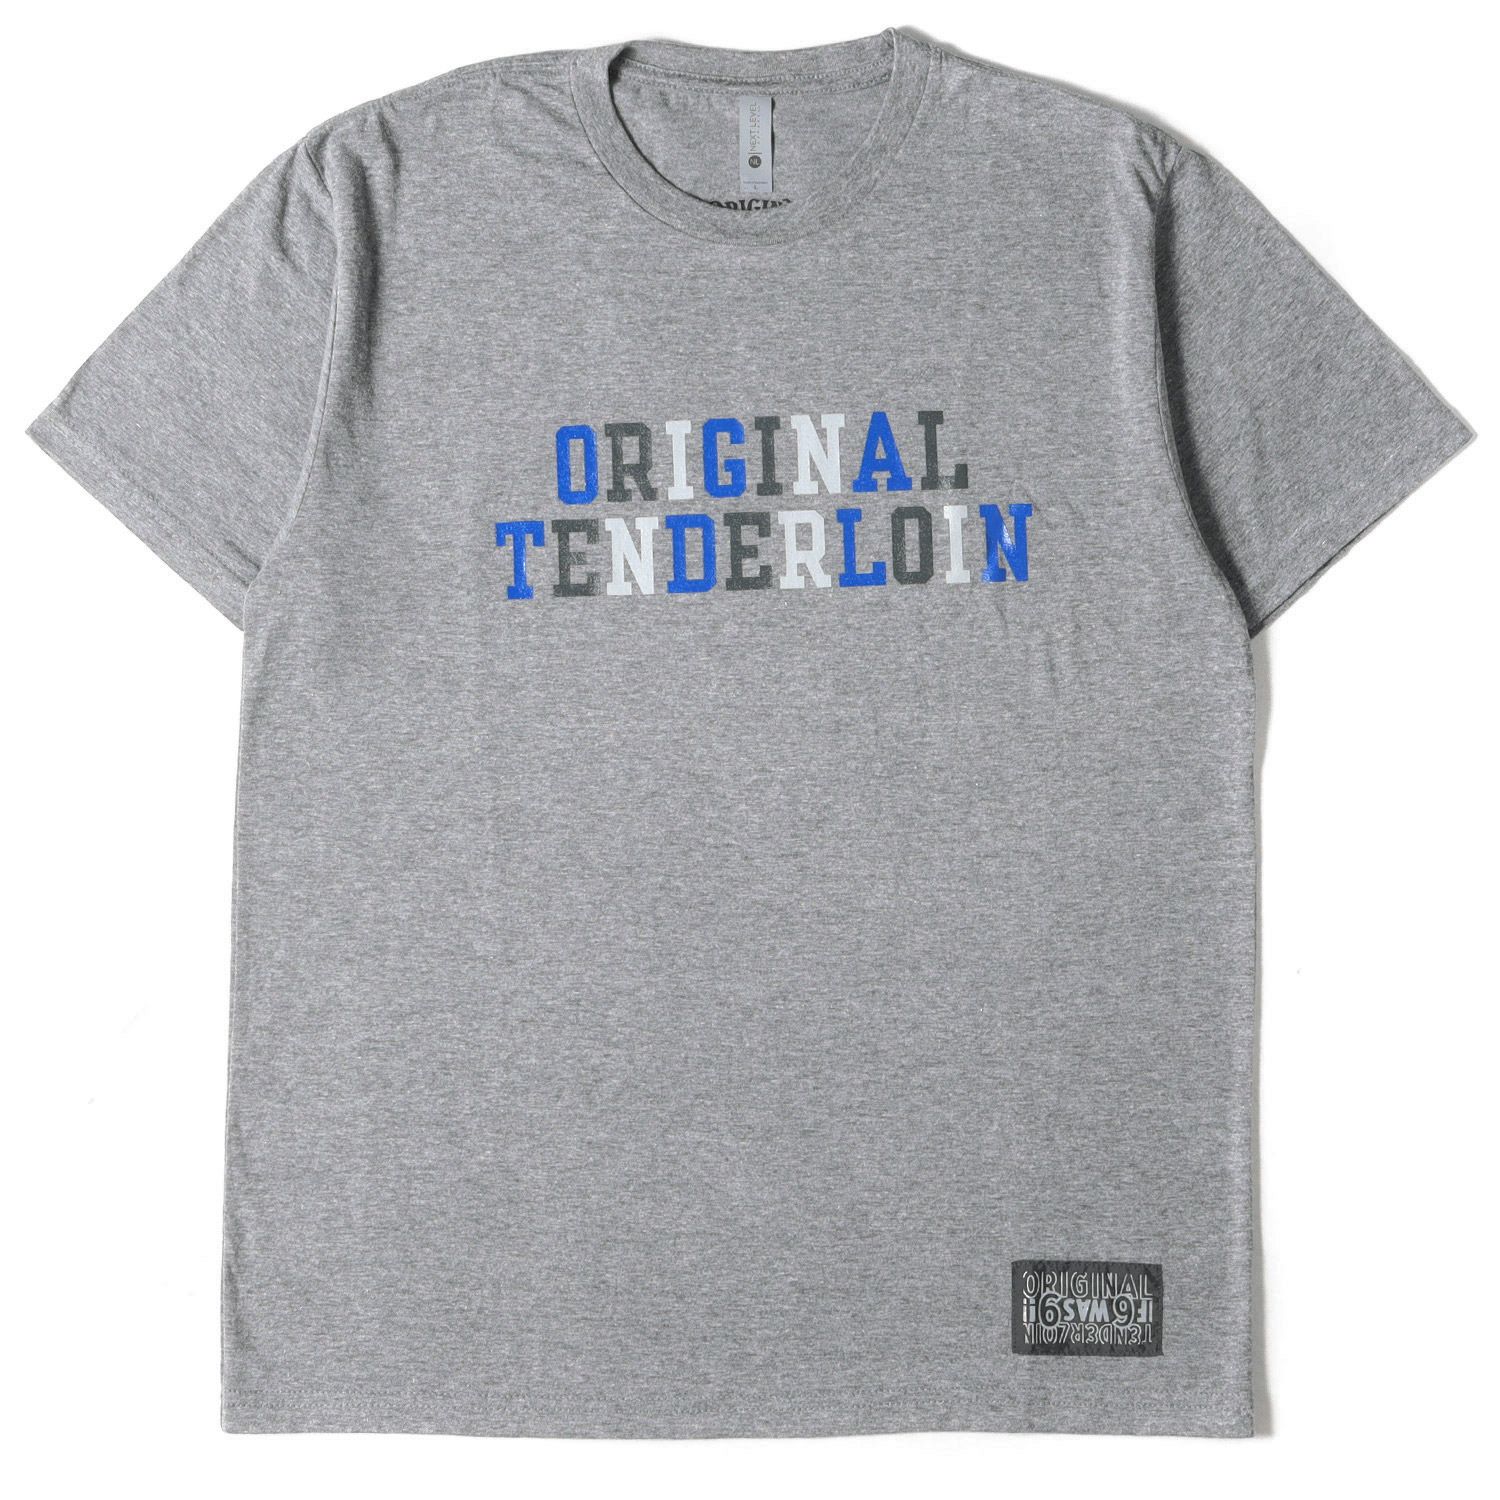 TENDERLOIN テンダーロイン Tシャツ ブランドロゴ クルーネックTシャツ